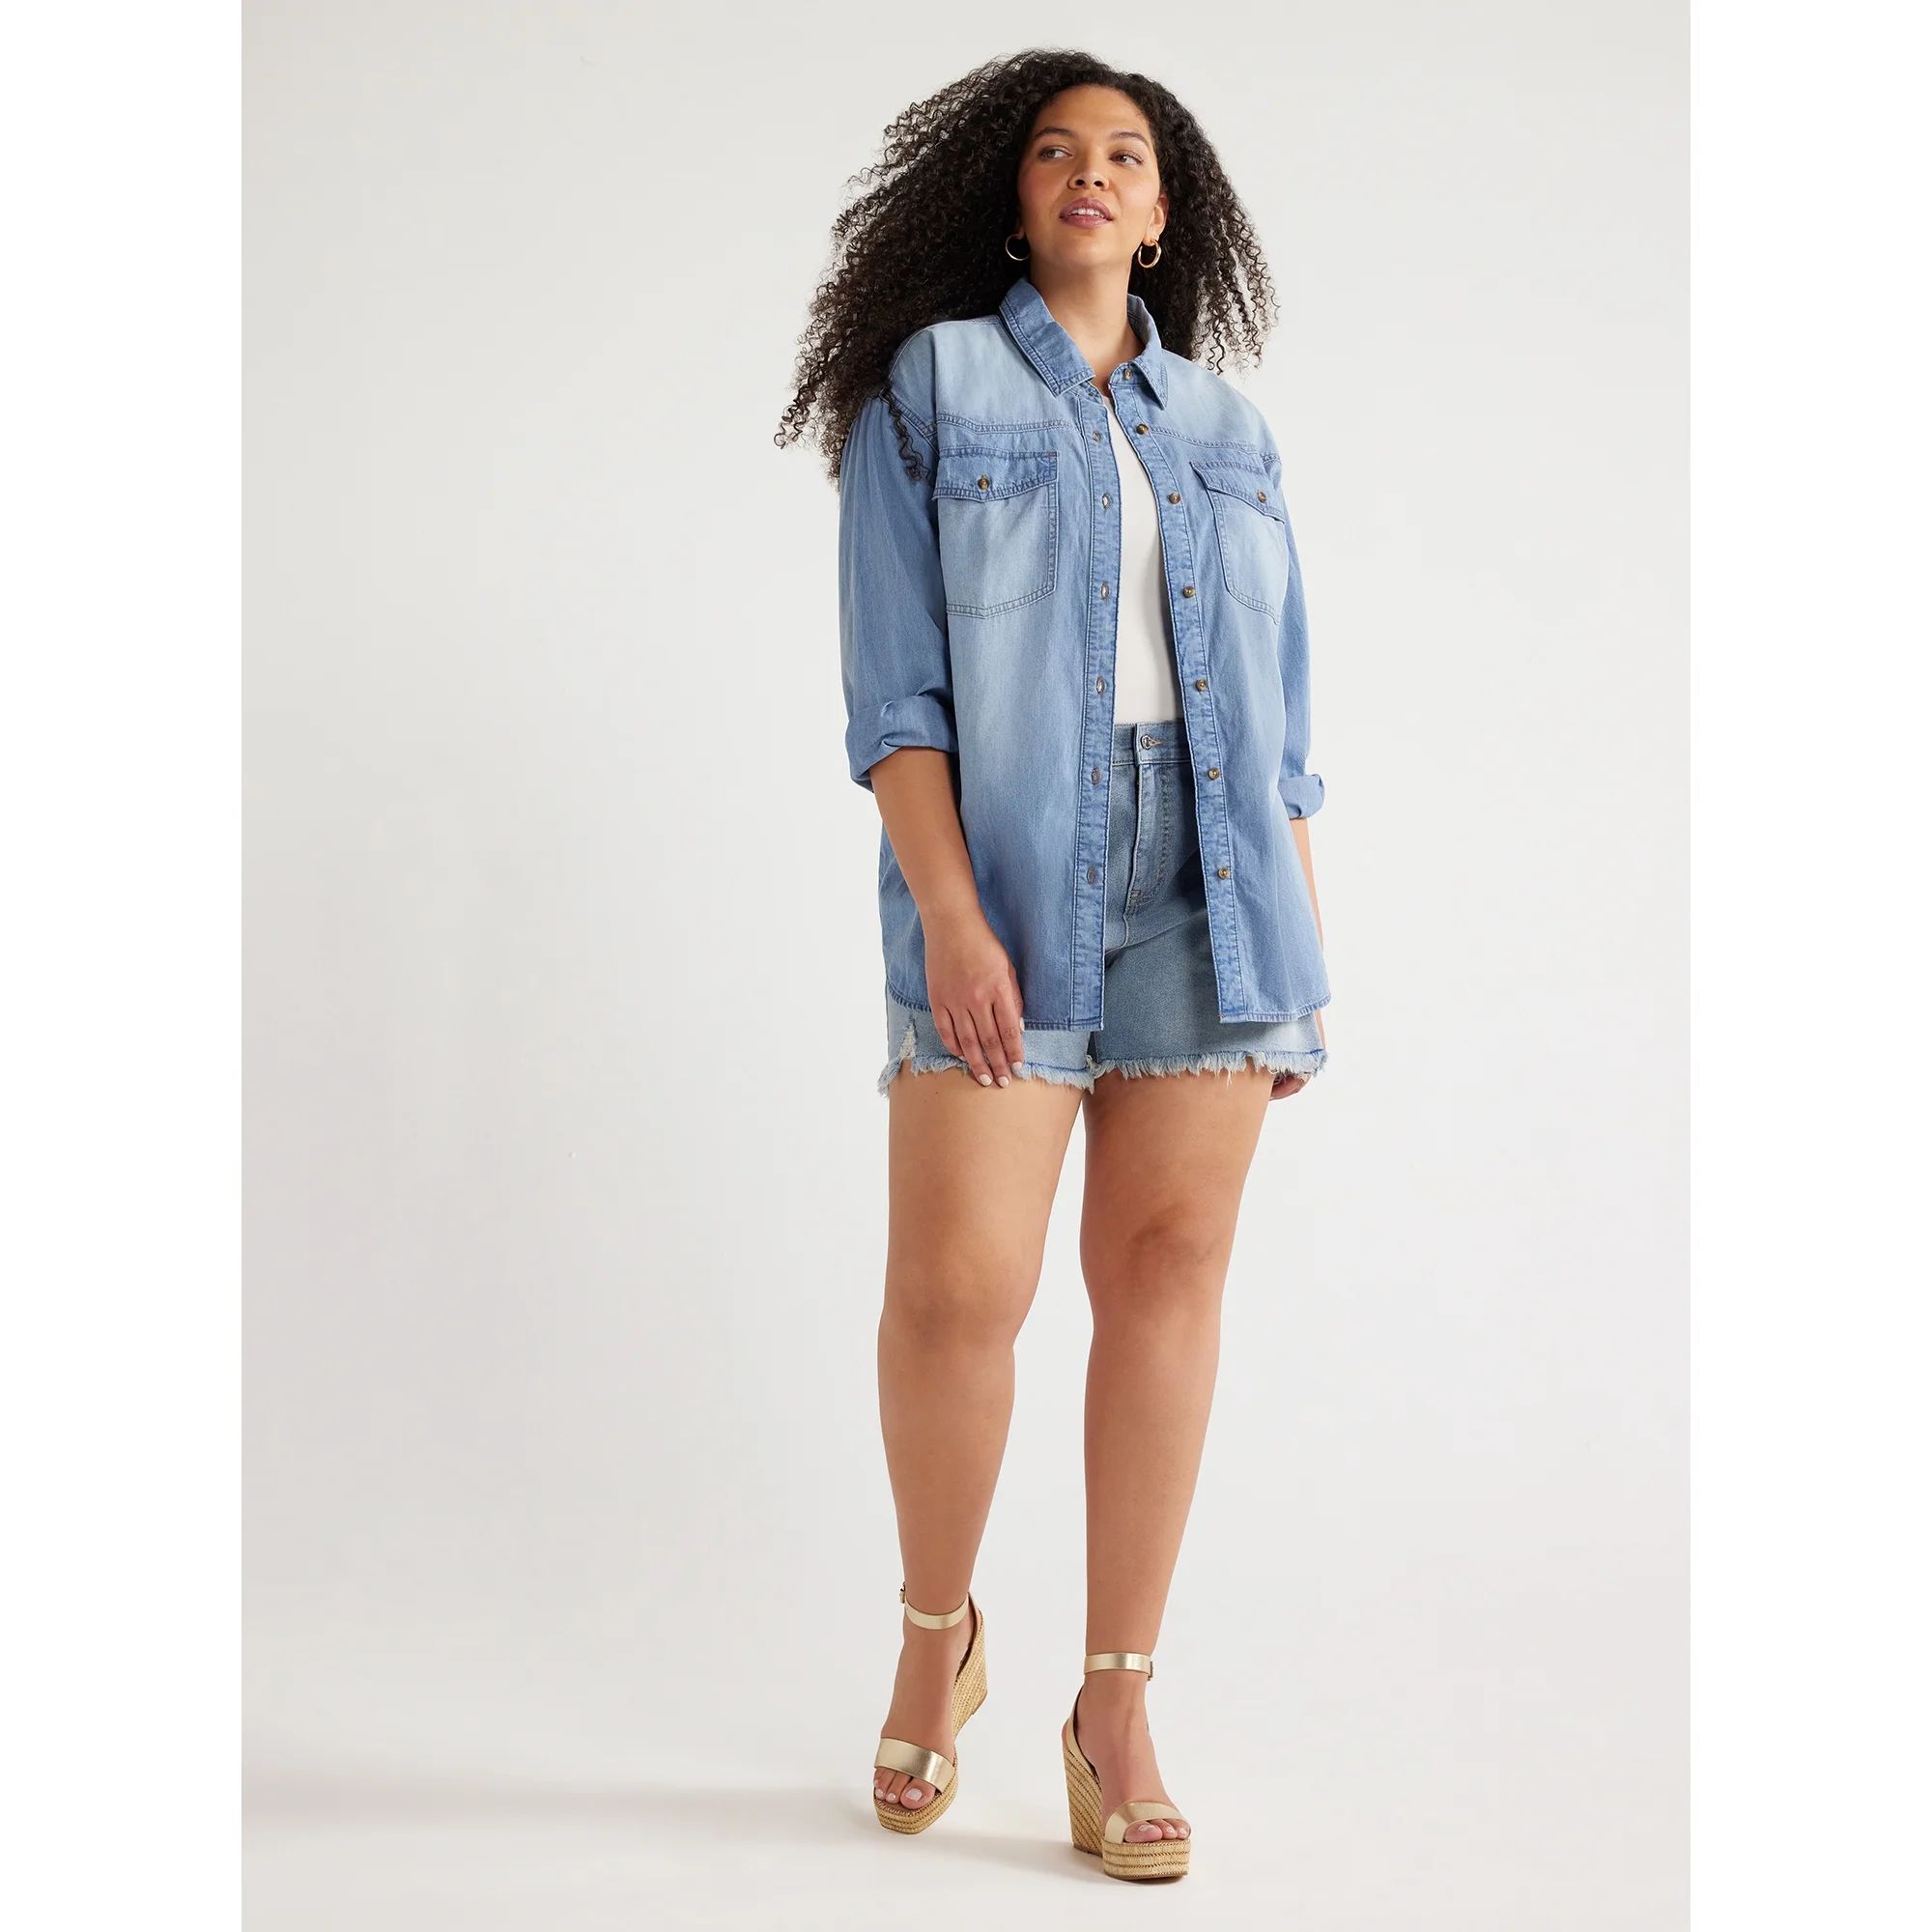 Sofia Jeans Women's and Women's Plus Oversized Boyfriend Shirt with Long Sleeves, Sizes XXS-5X | Walmart (US)